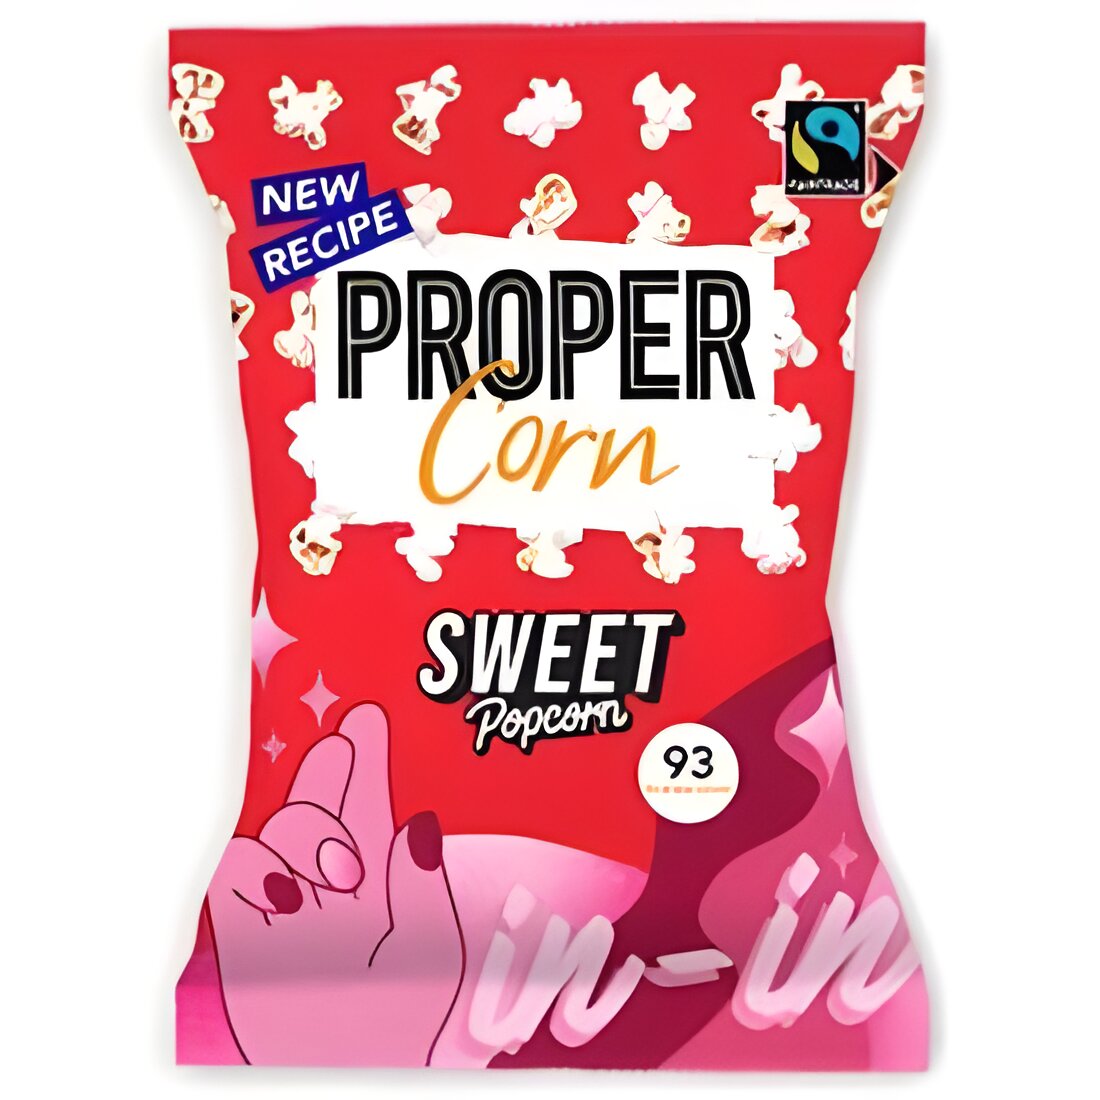 Free Propercorn Perfectly Sweet Popcorn